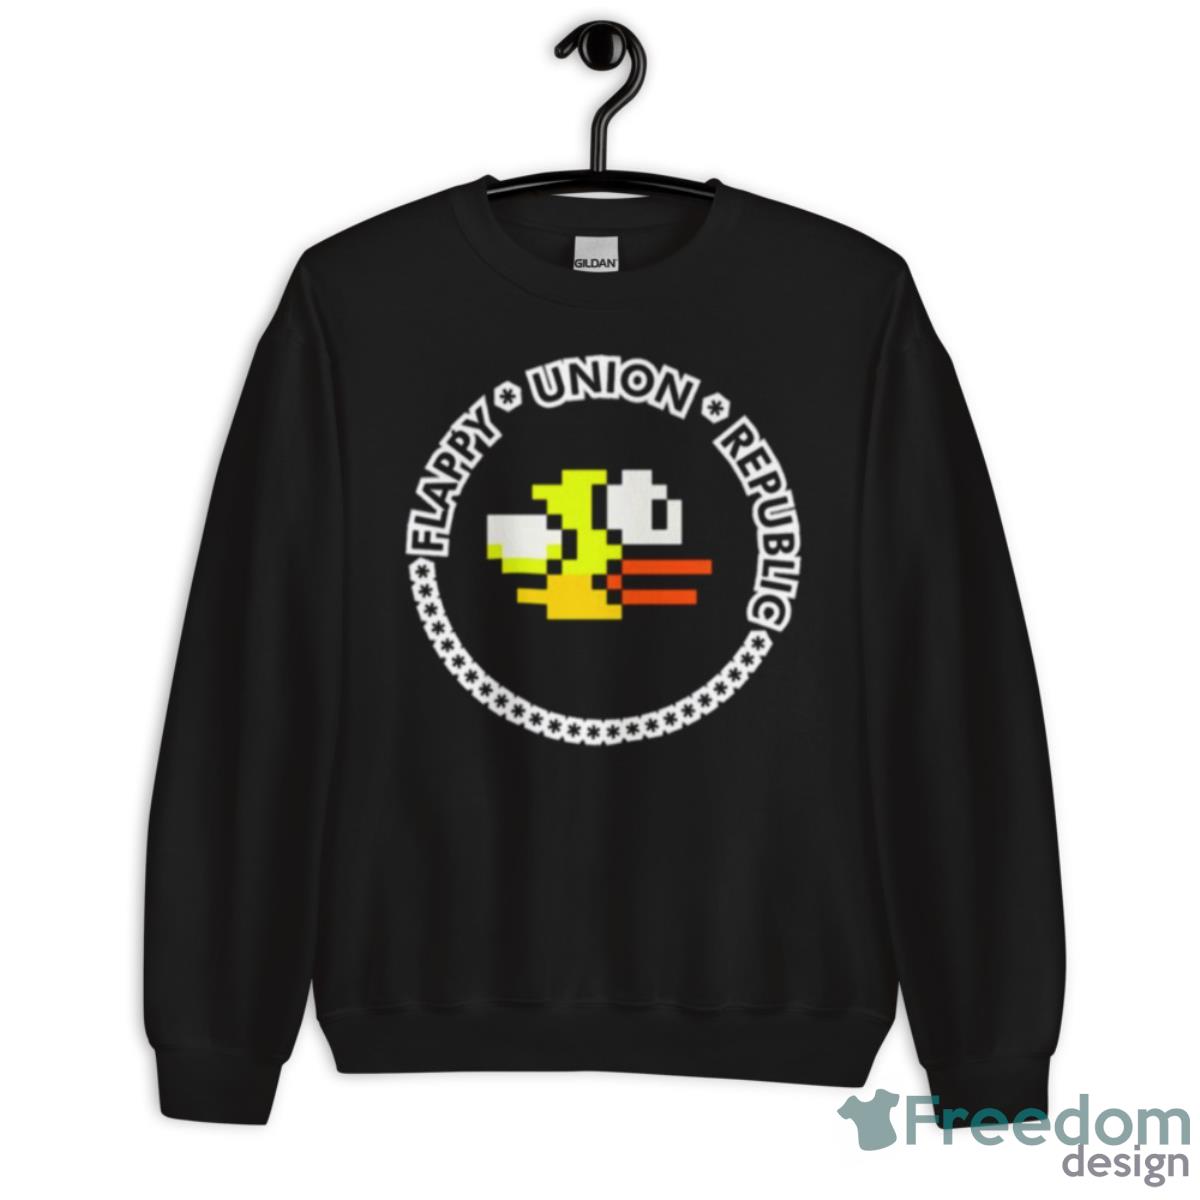 Flappy Bird Union Republic Shirt